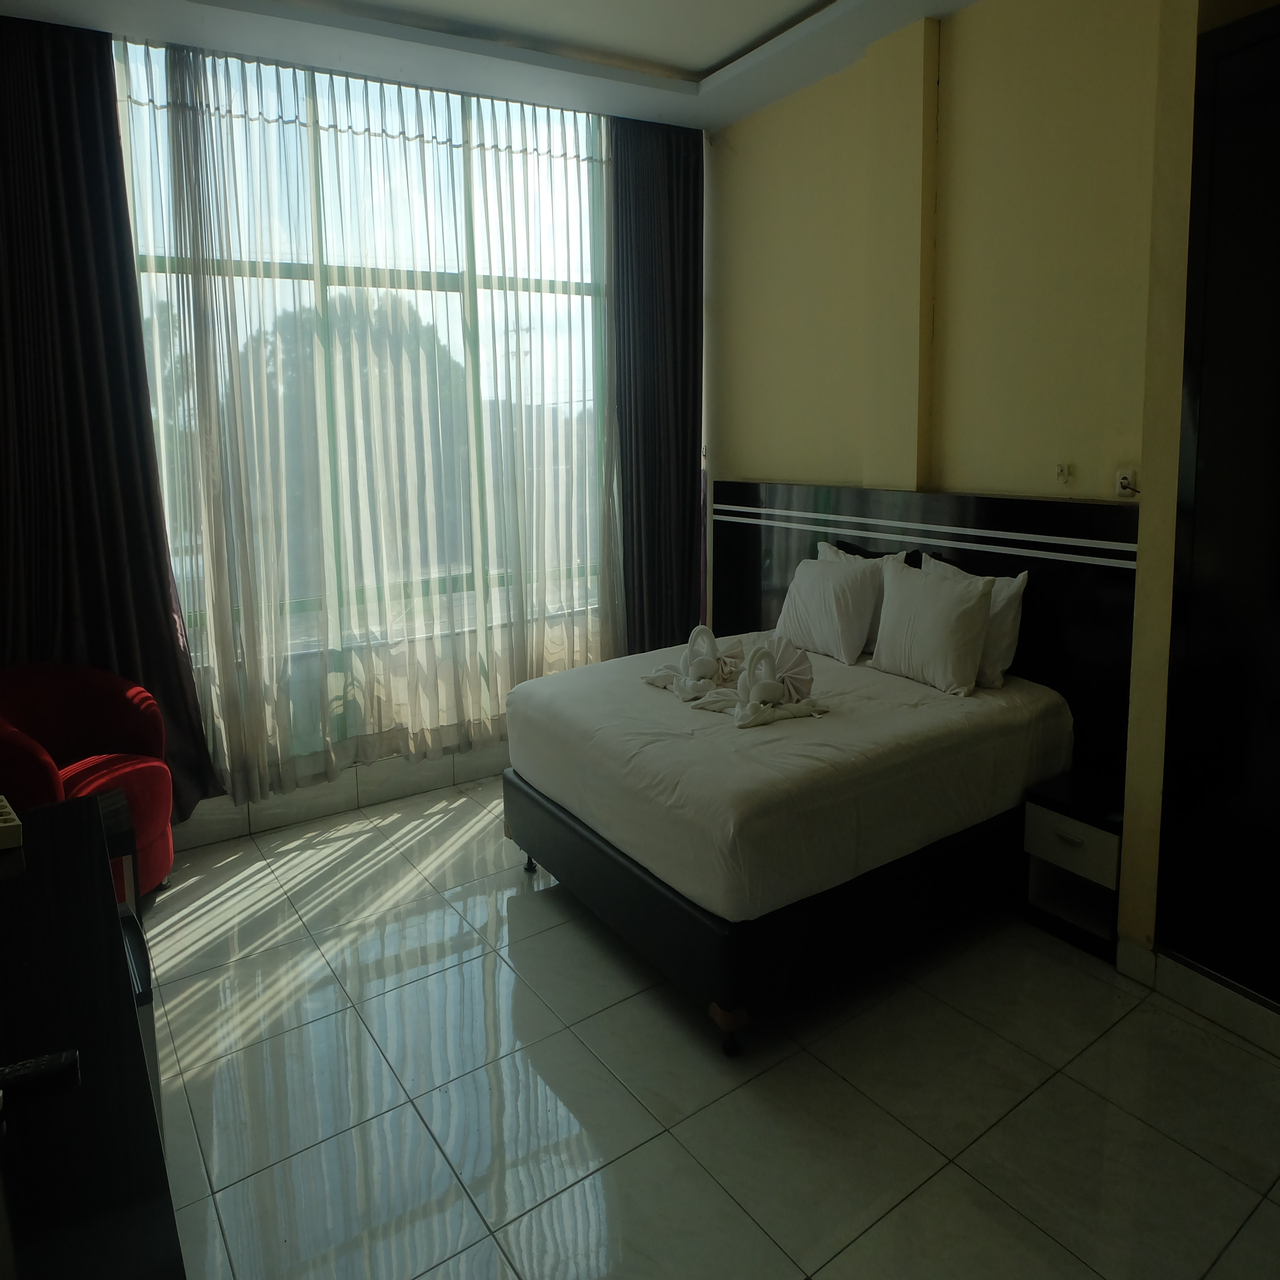 Bedroom 1, Satria Putra Mandiri Hotel, Madiun